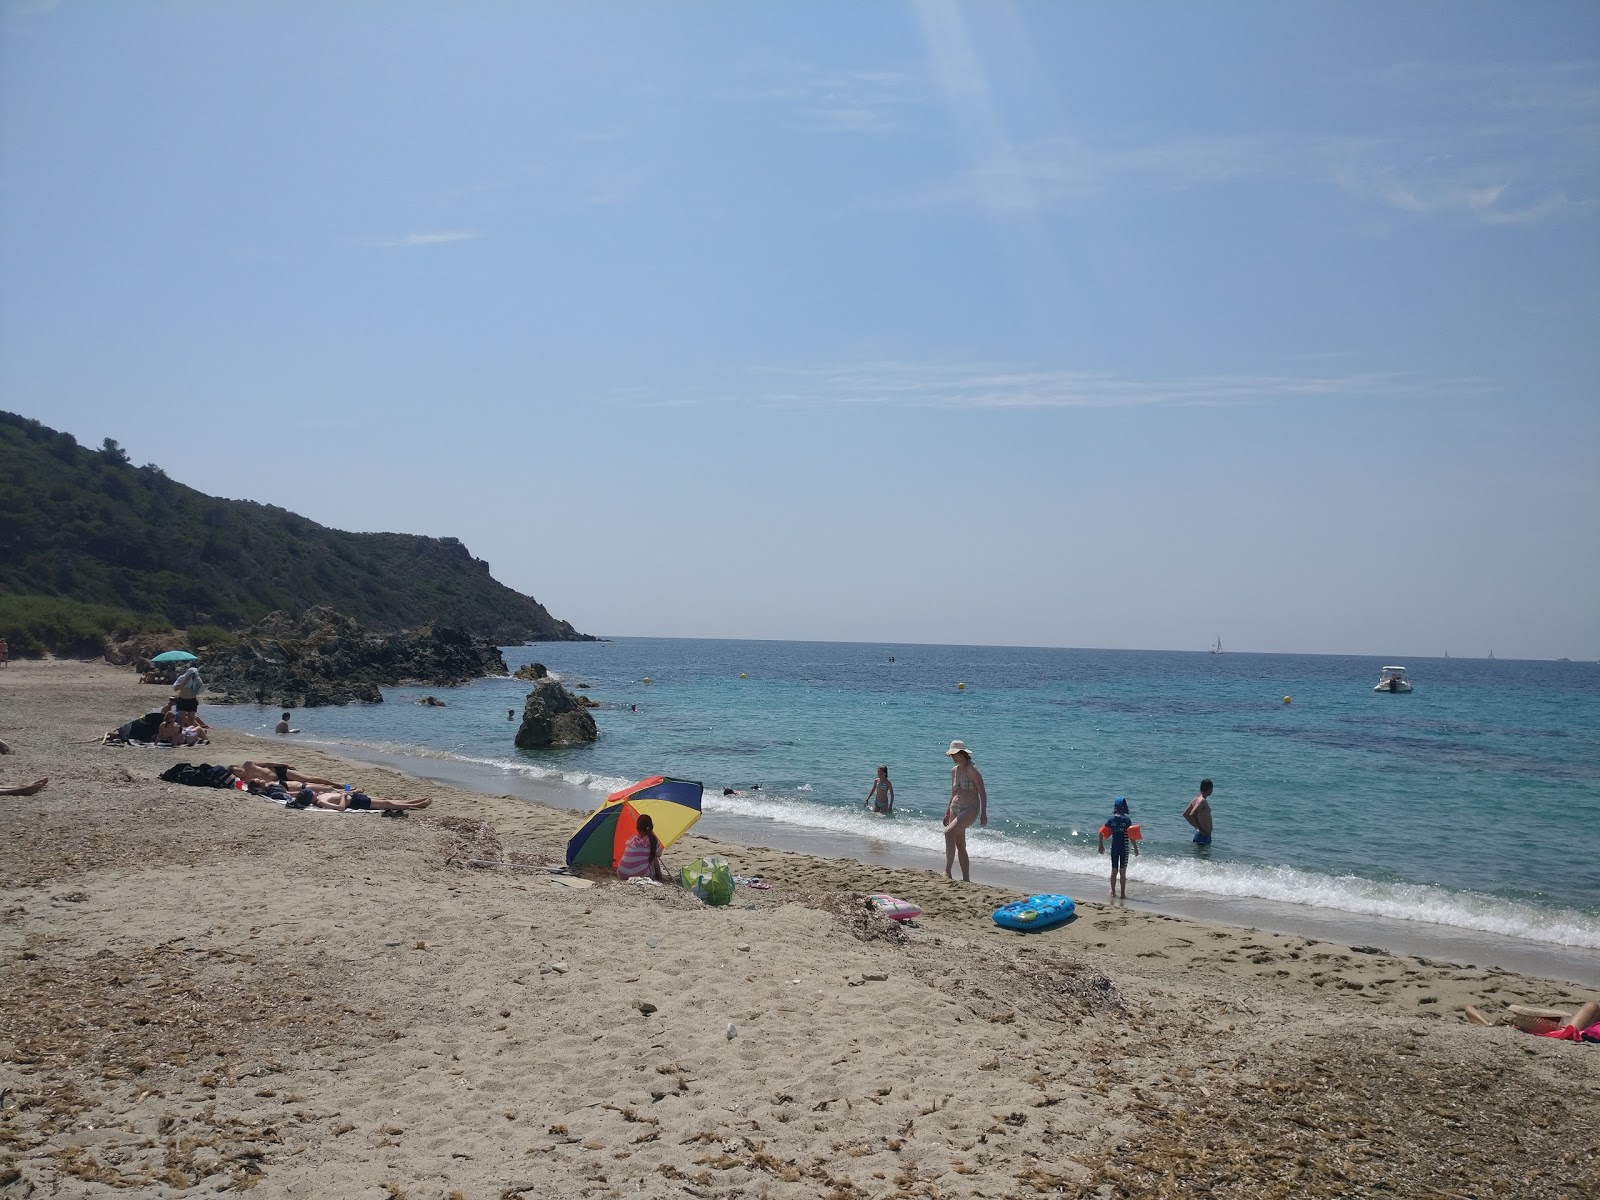 Fotografie cu Briande beach - locul popular printre cunoscătorii de relaxare